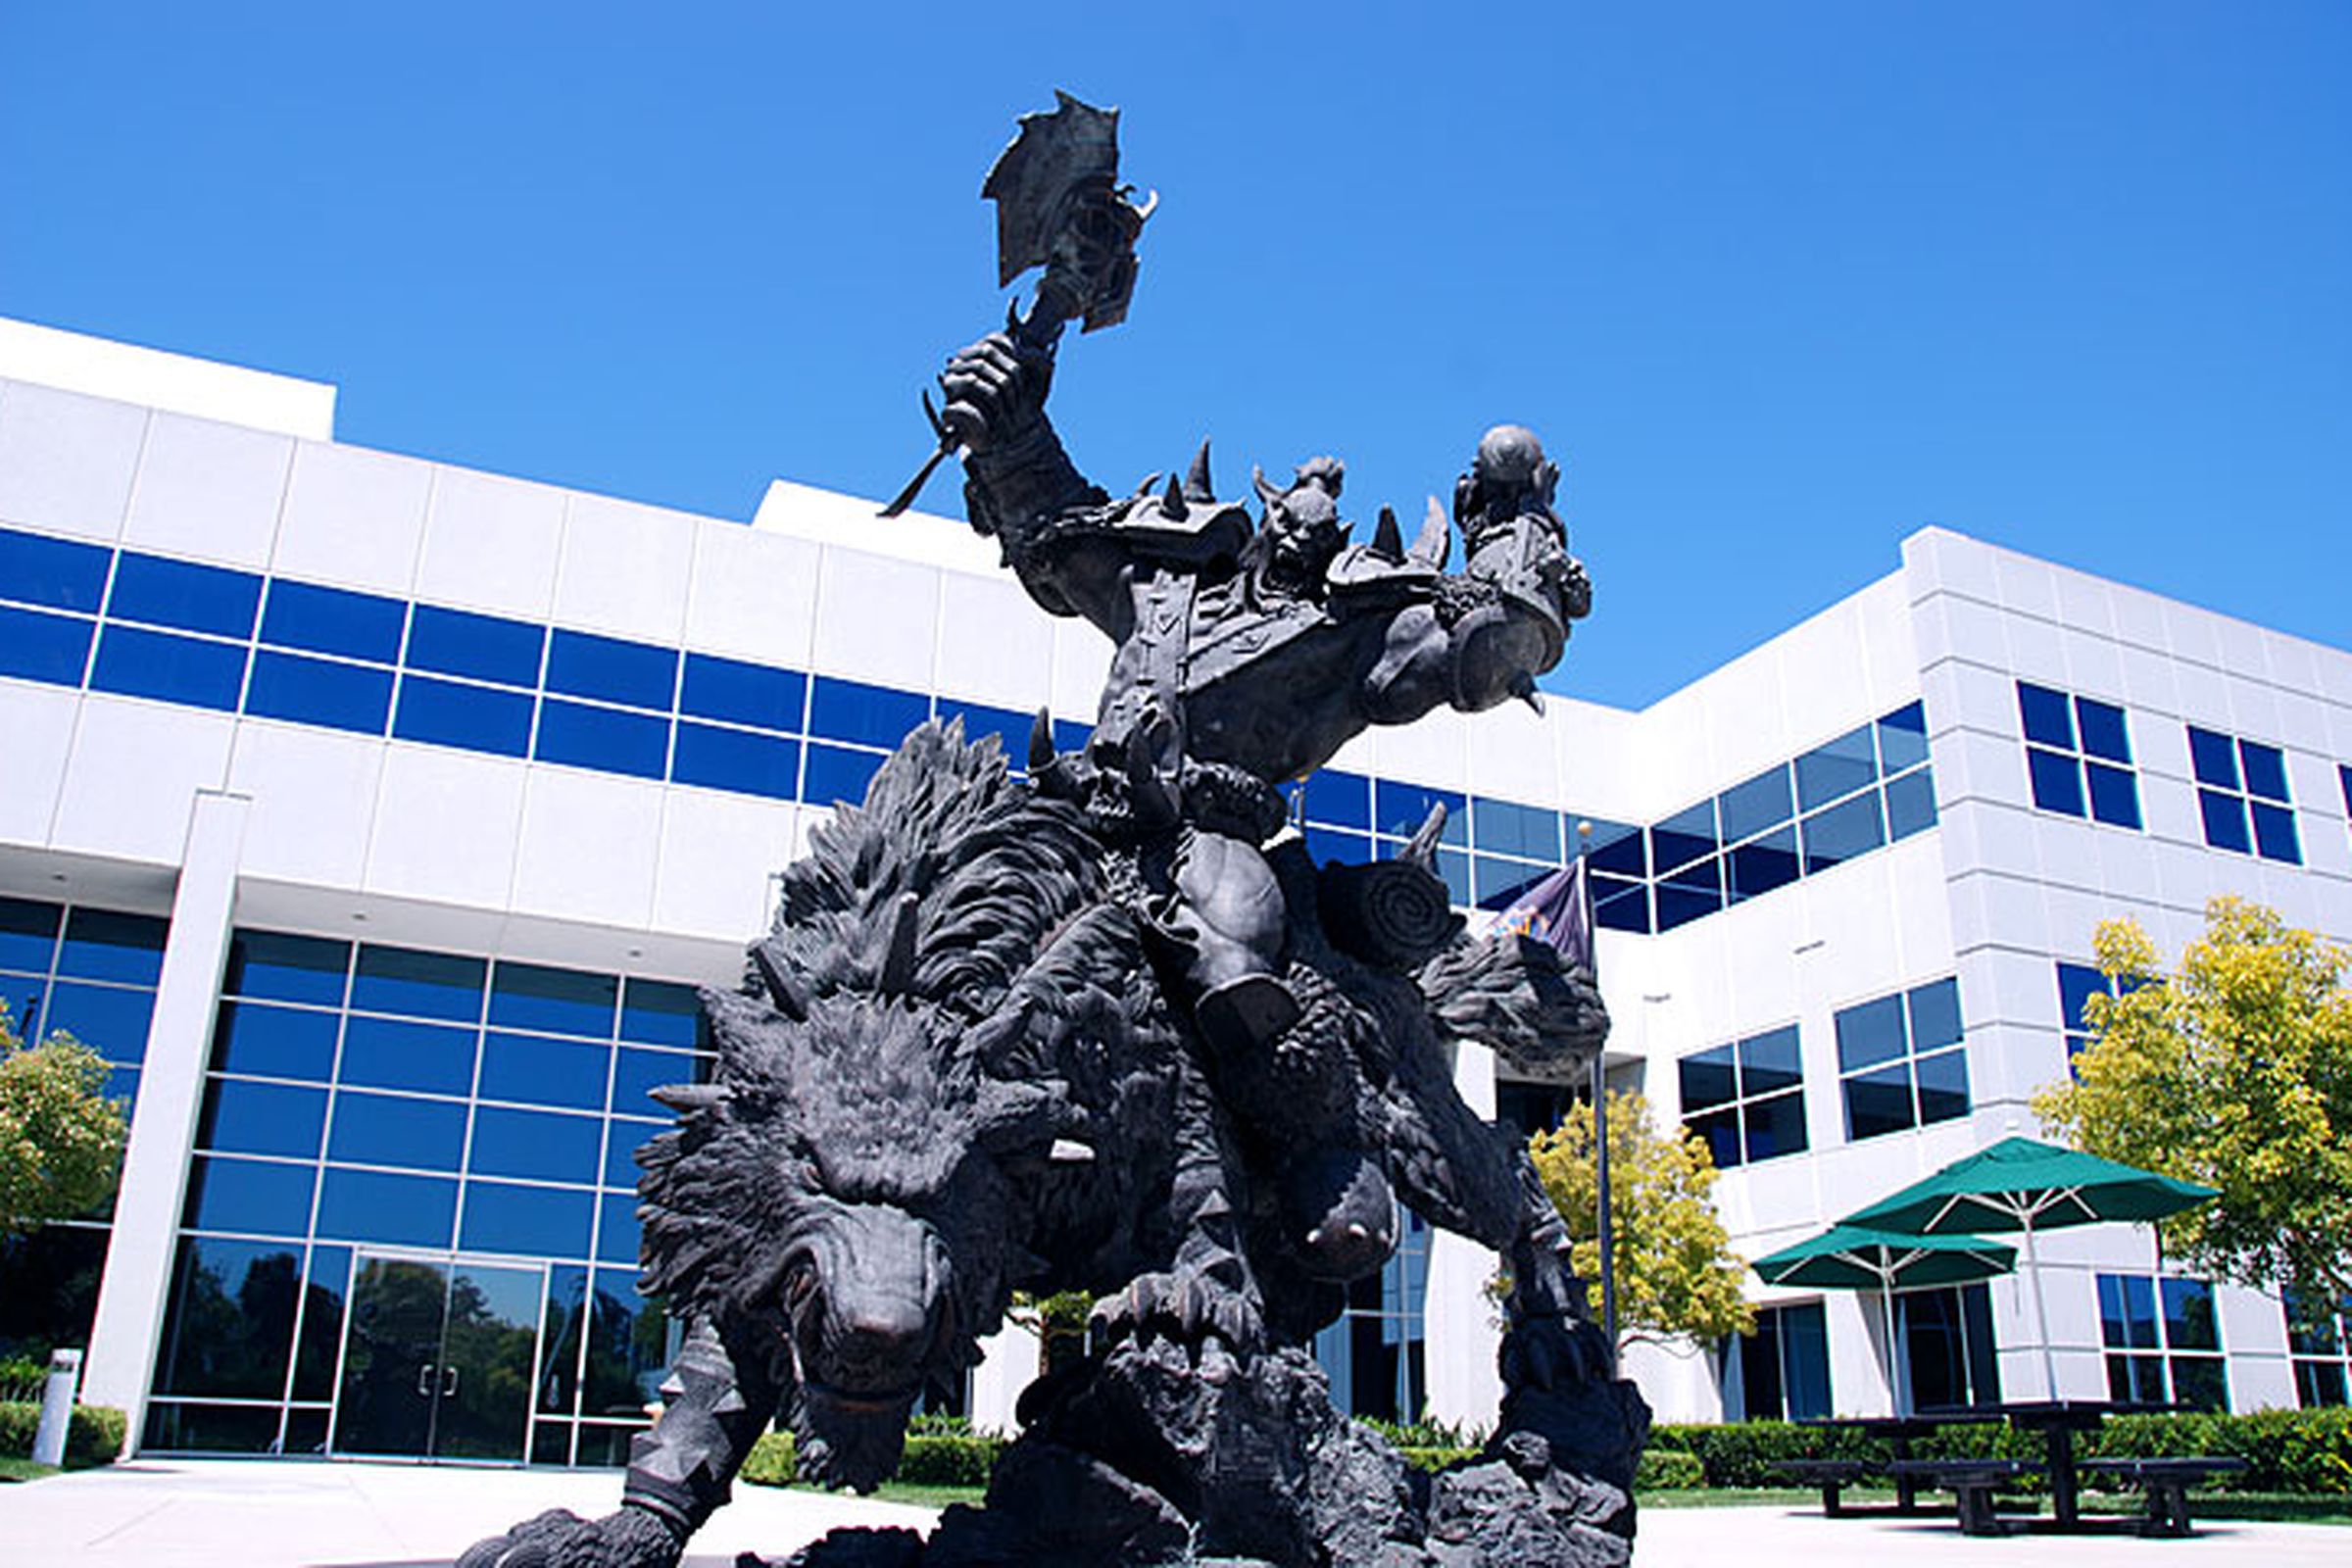 Blizzard Orc statue